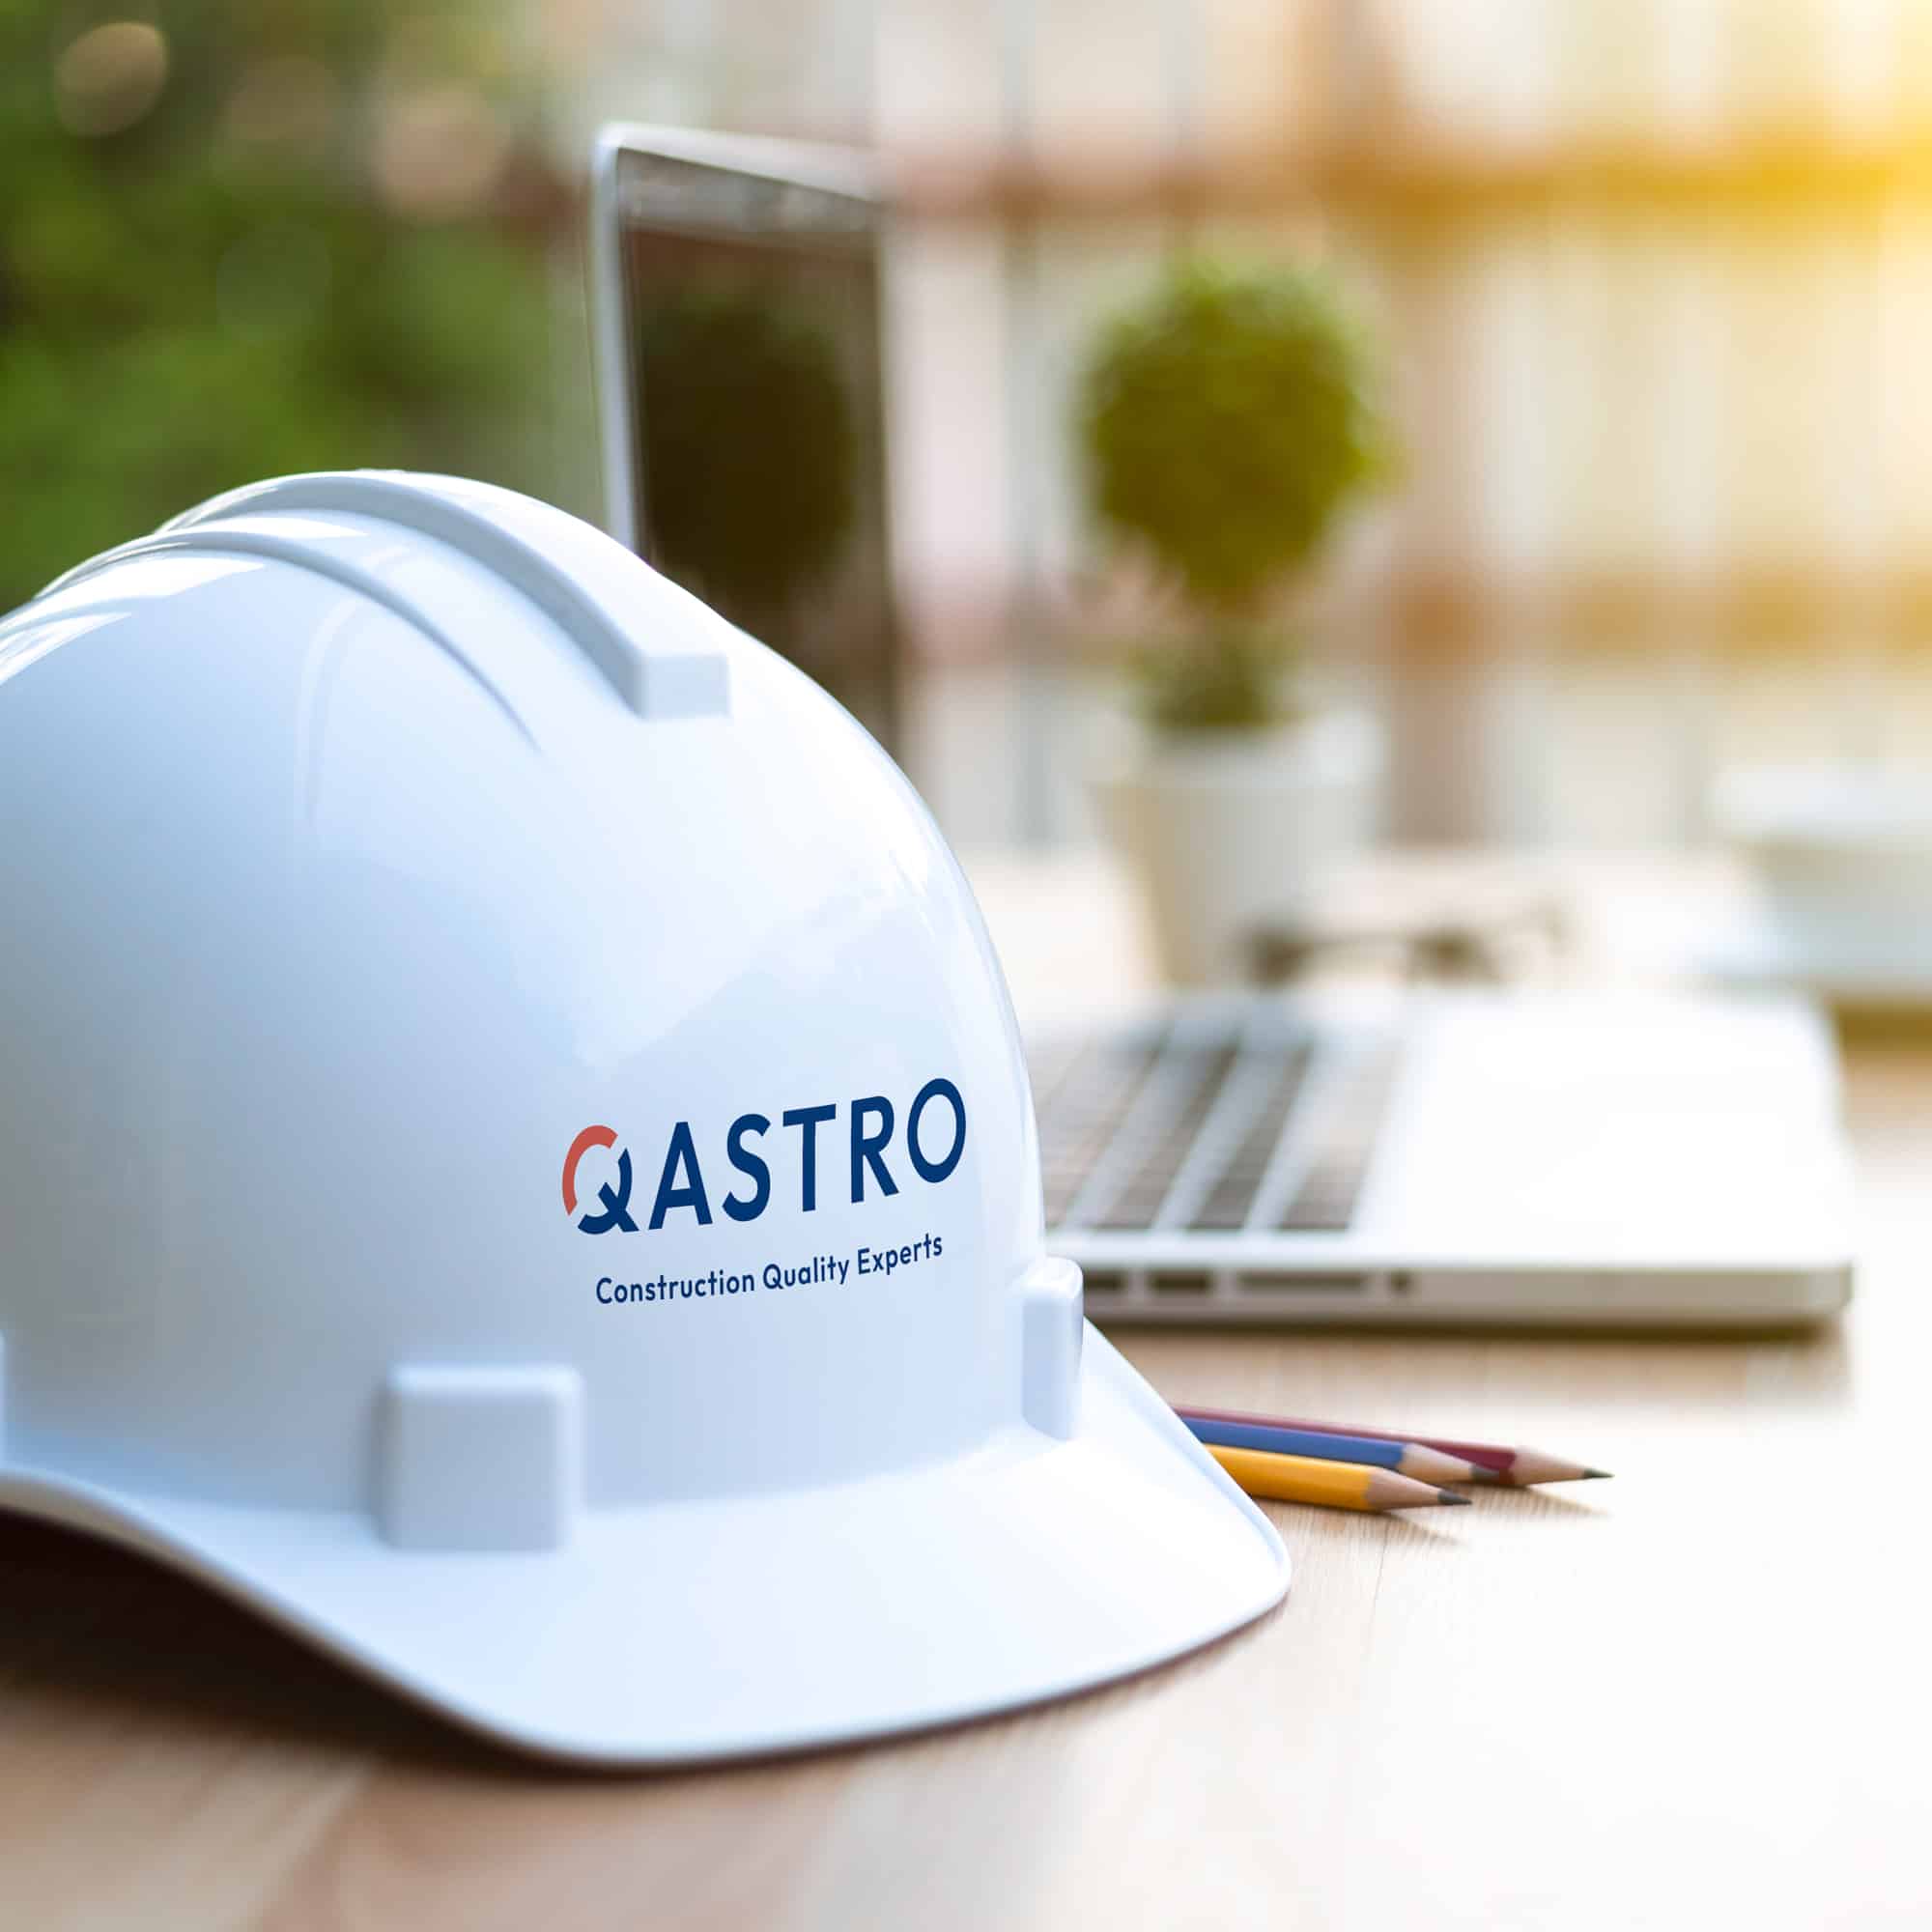 QASTRO Construction Quality Experts